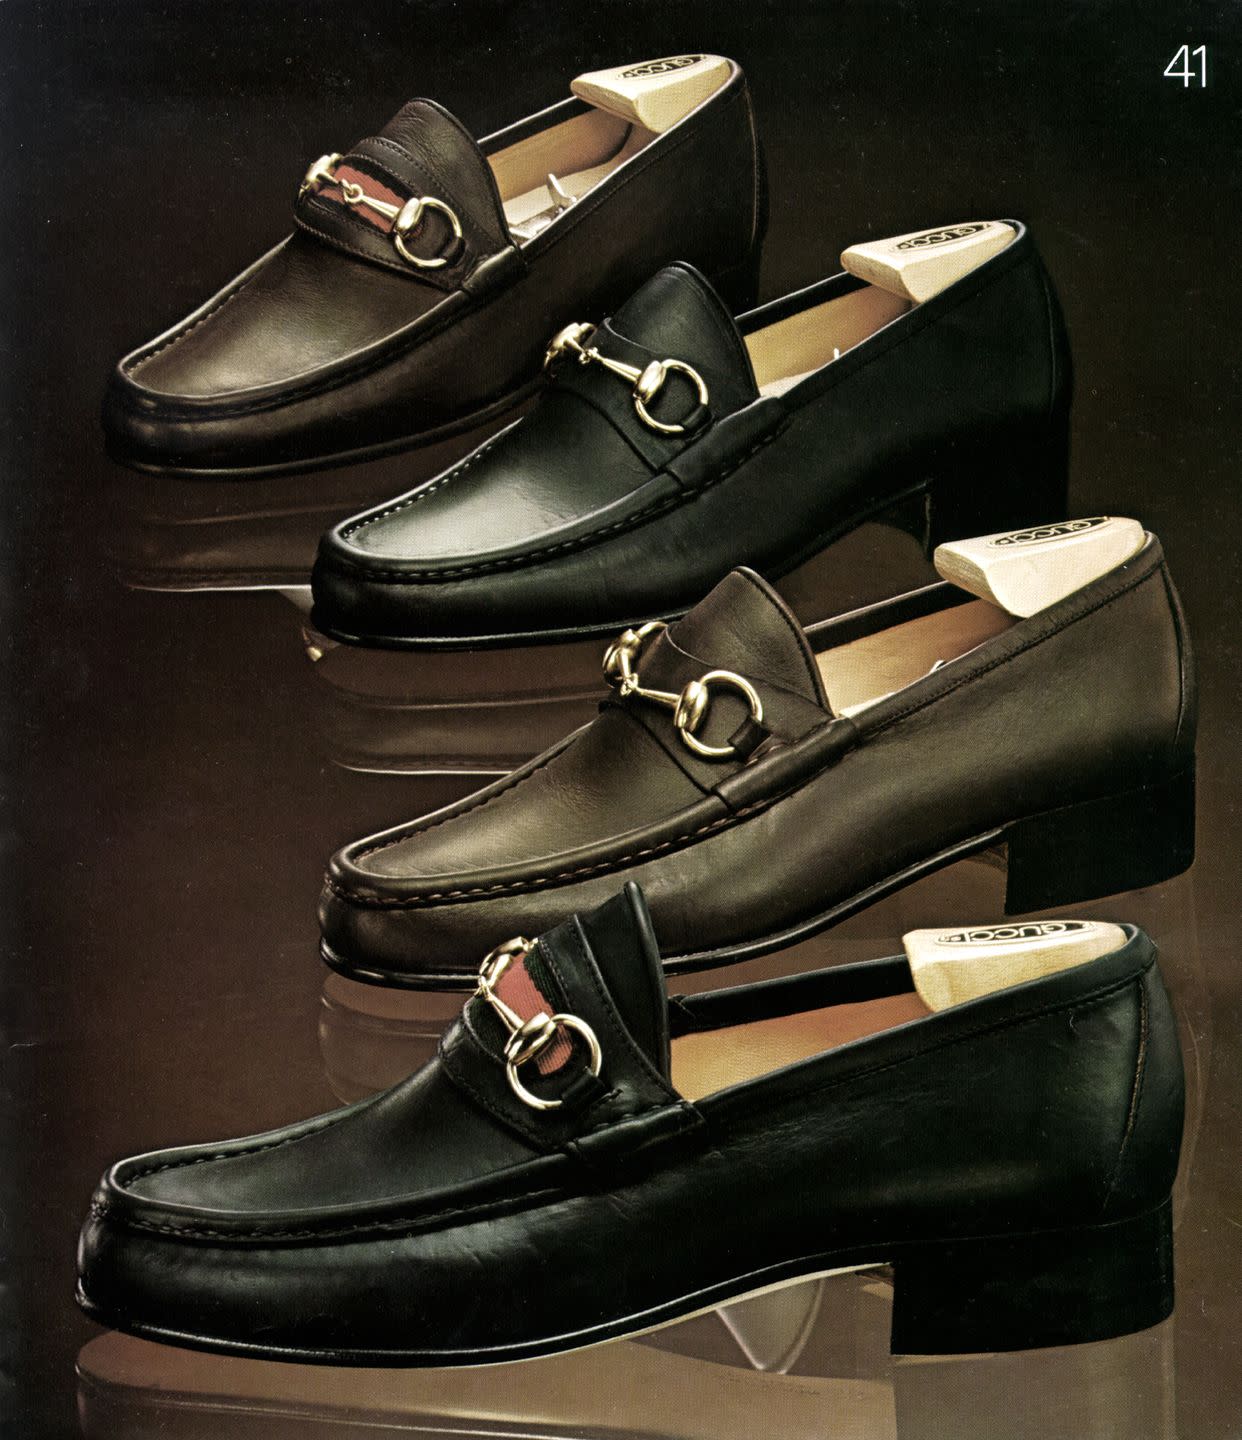 the horsebit loafer, circa 1976